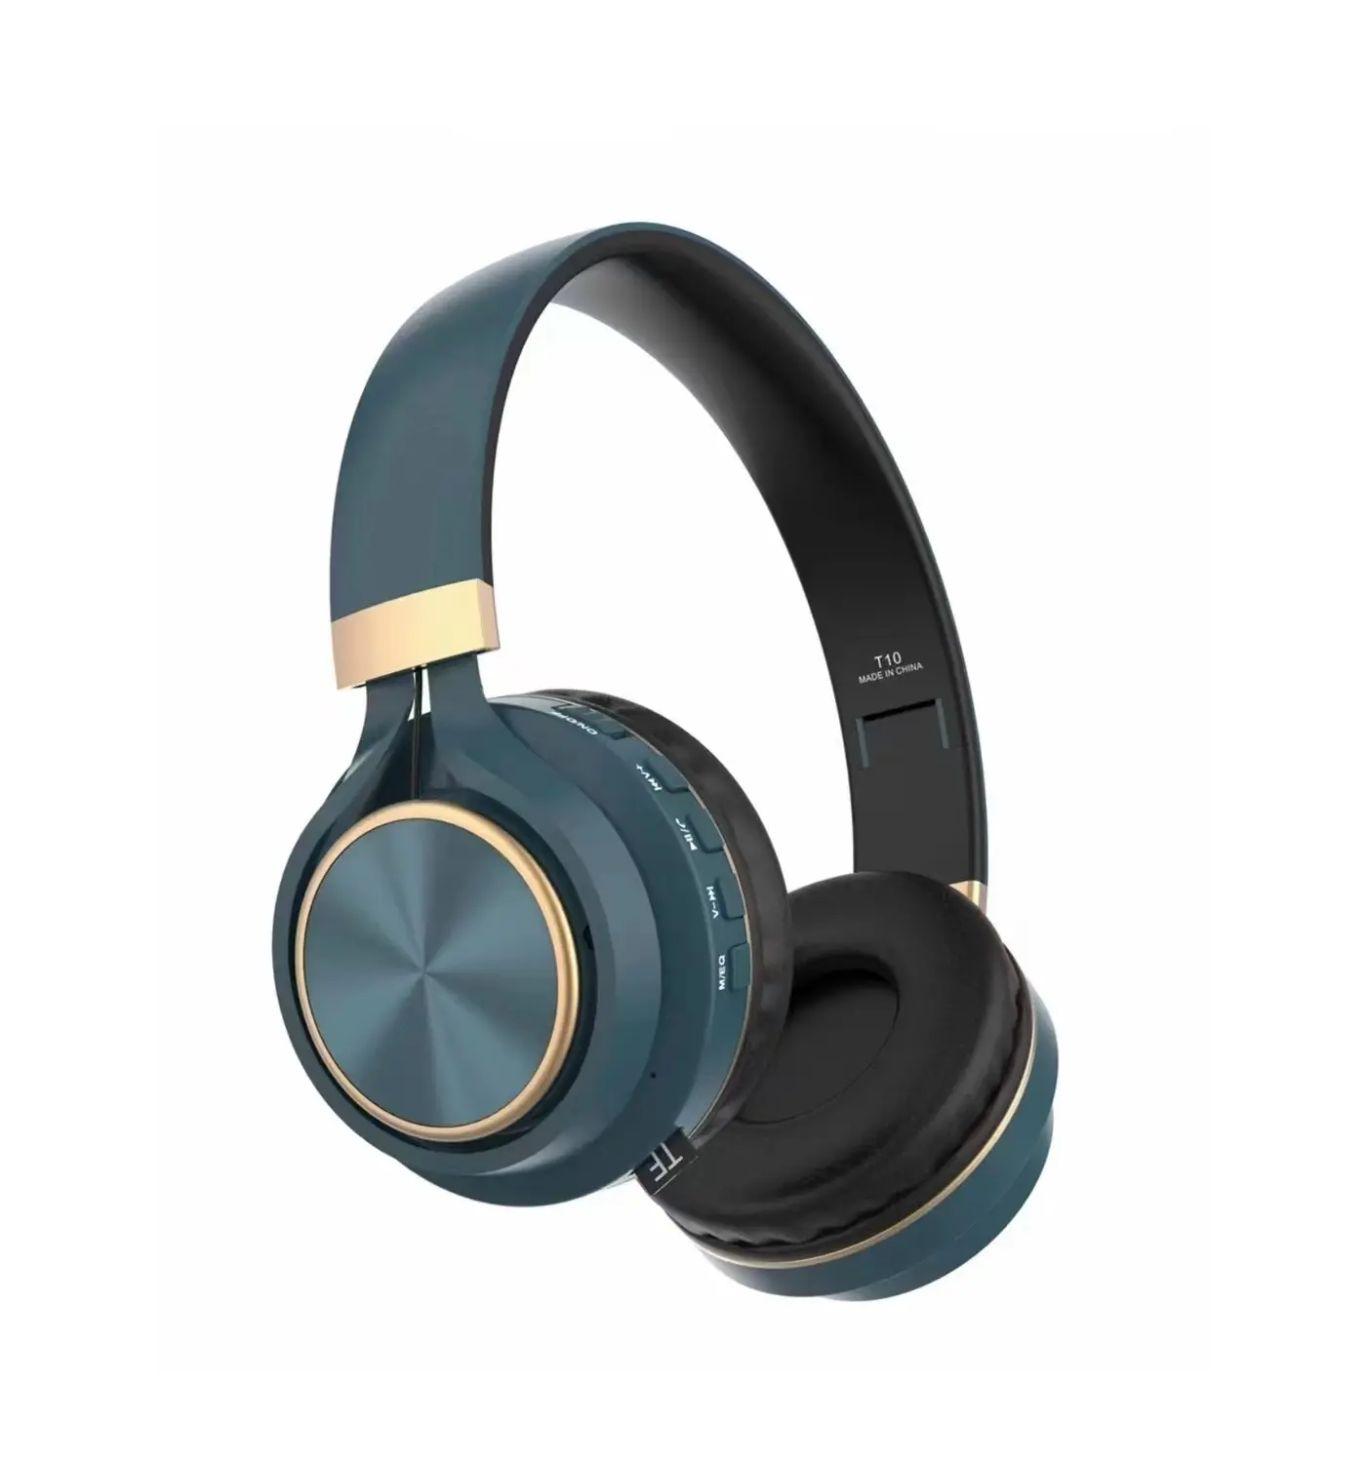 Bluetooth Headphones Blue